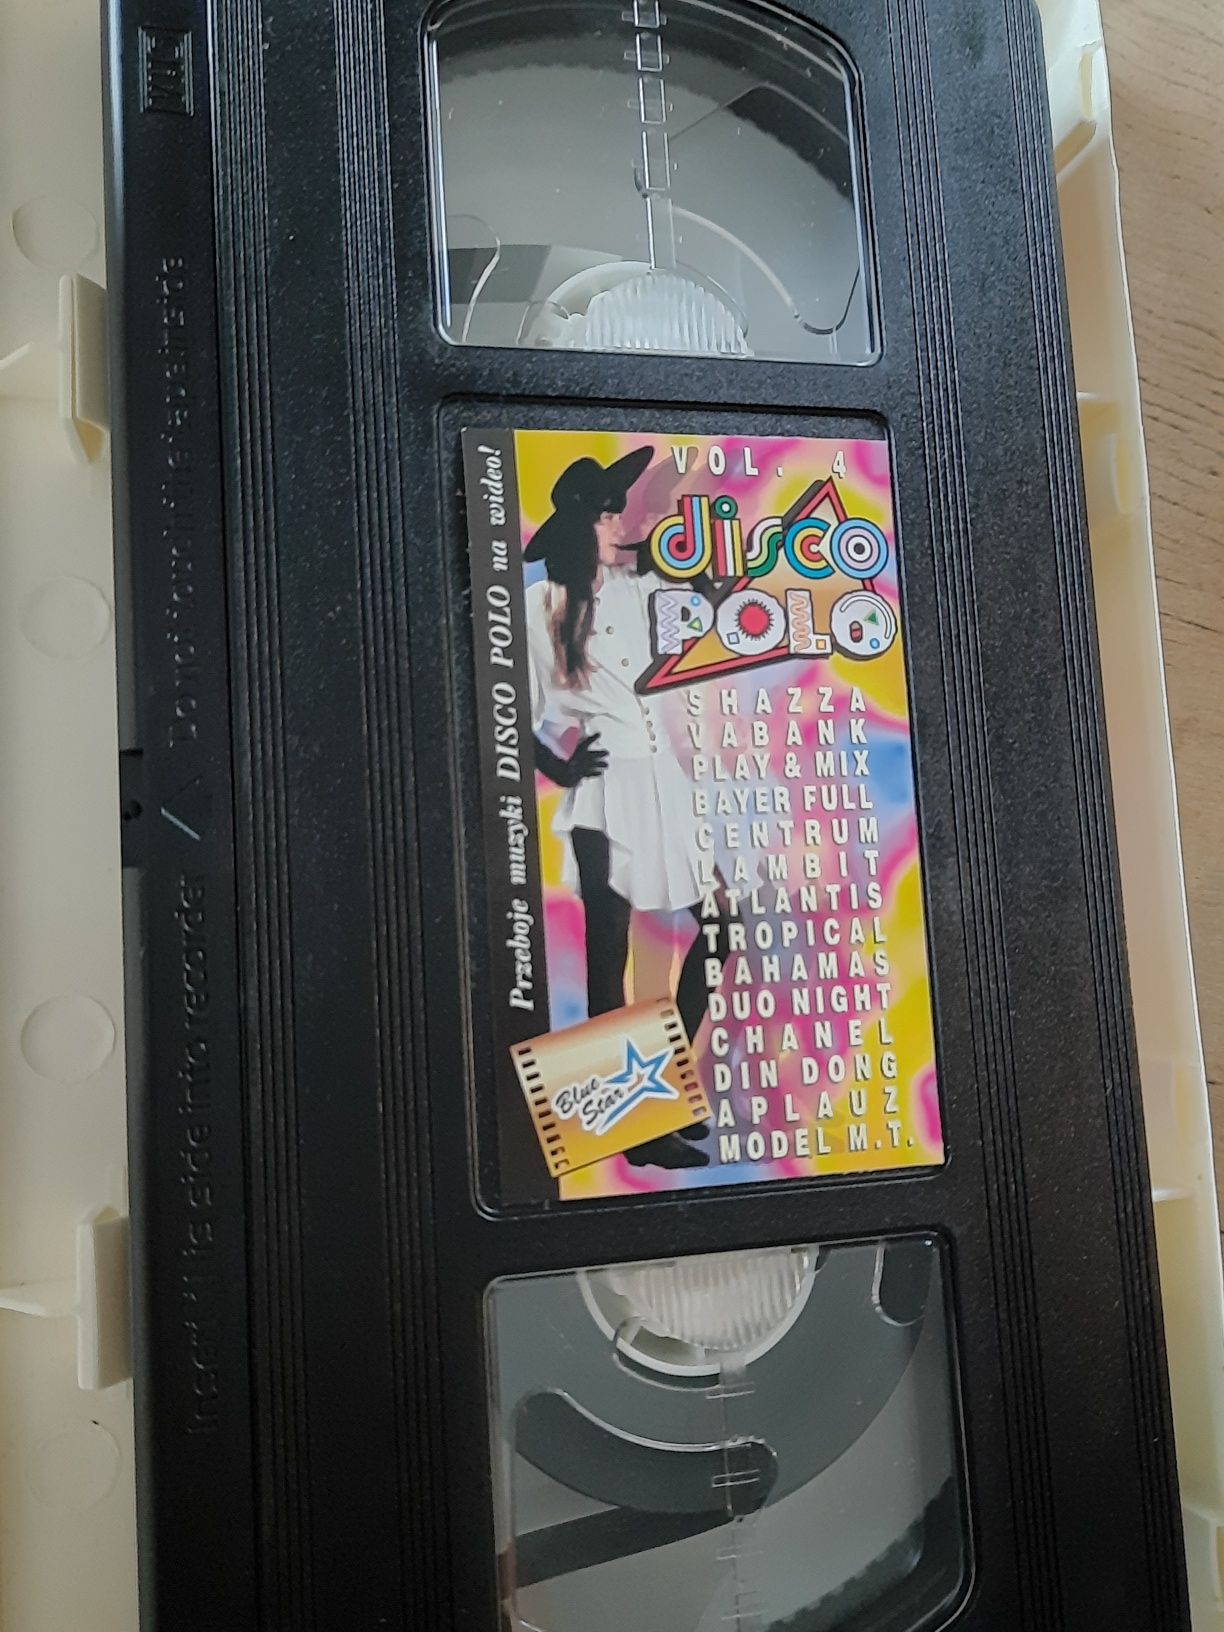 Disco Polo  vol. 3 i vol. 4 kasety VHS video